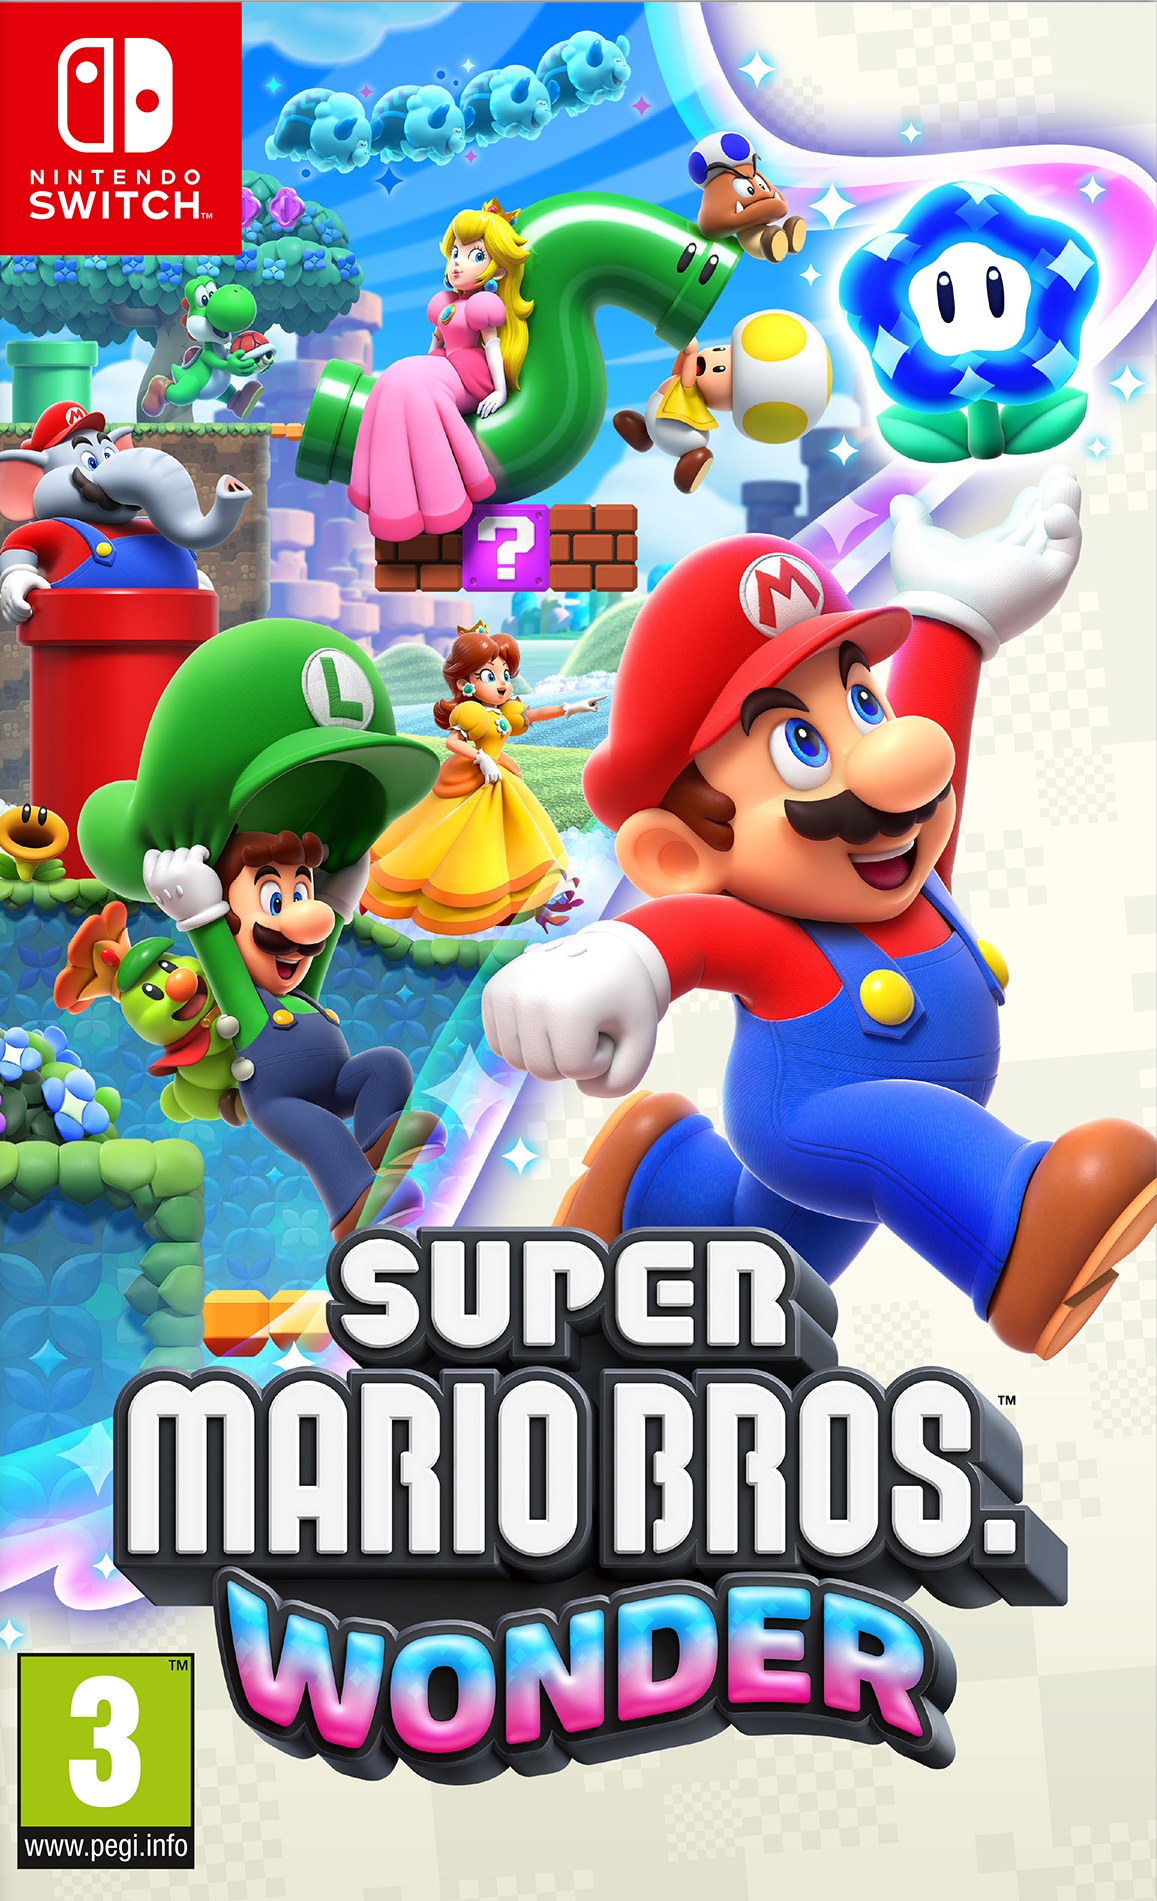 jaquette reduite de Super Mario Bros. Wonder sur Switch